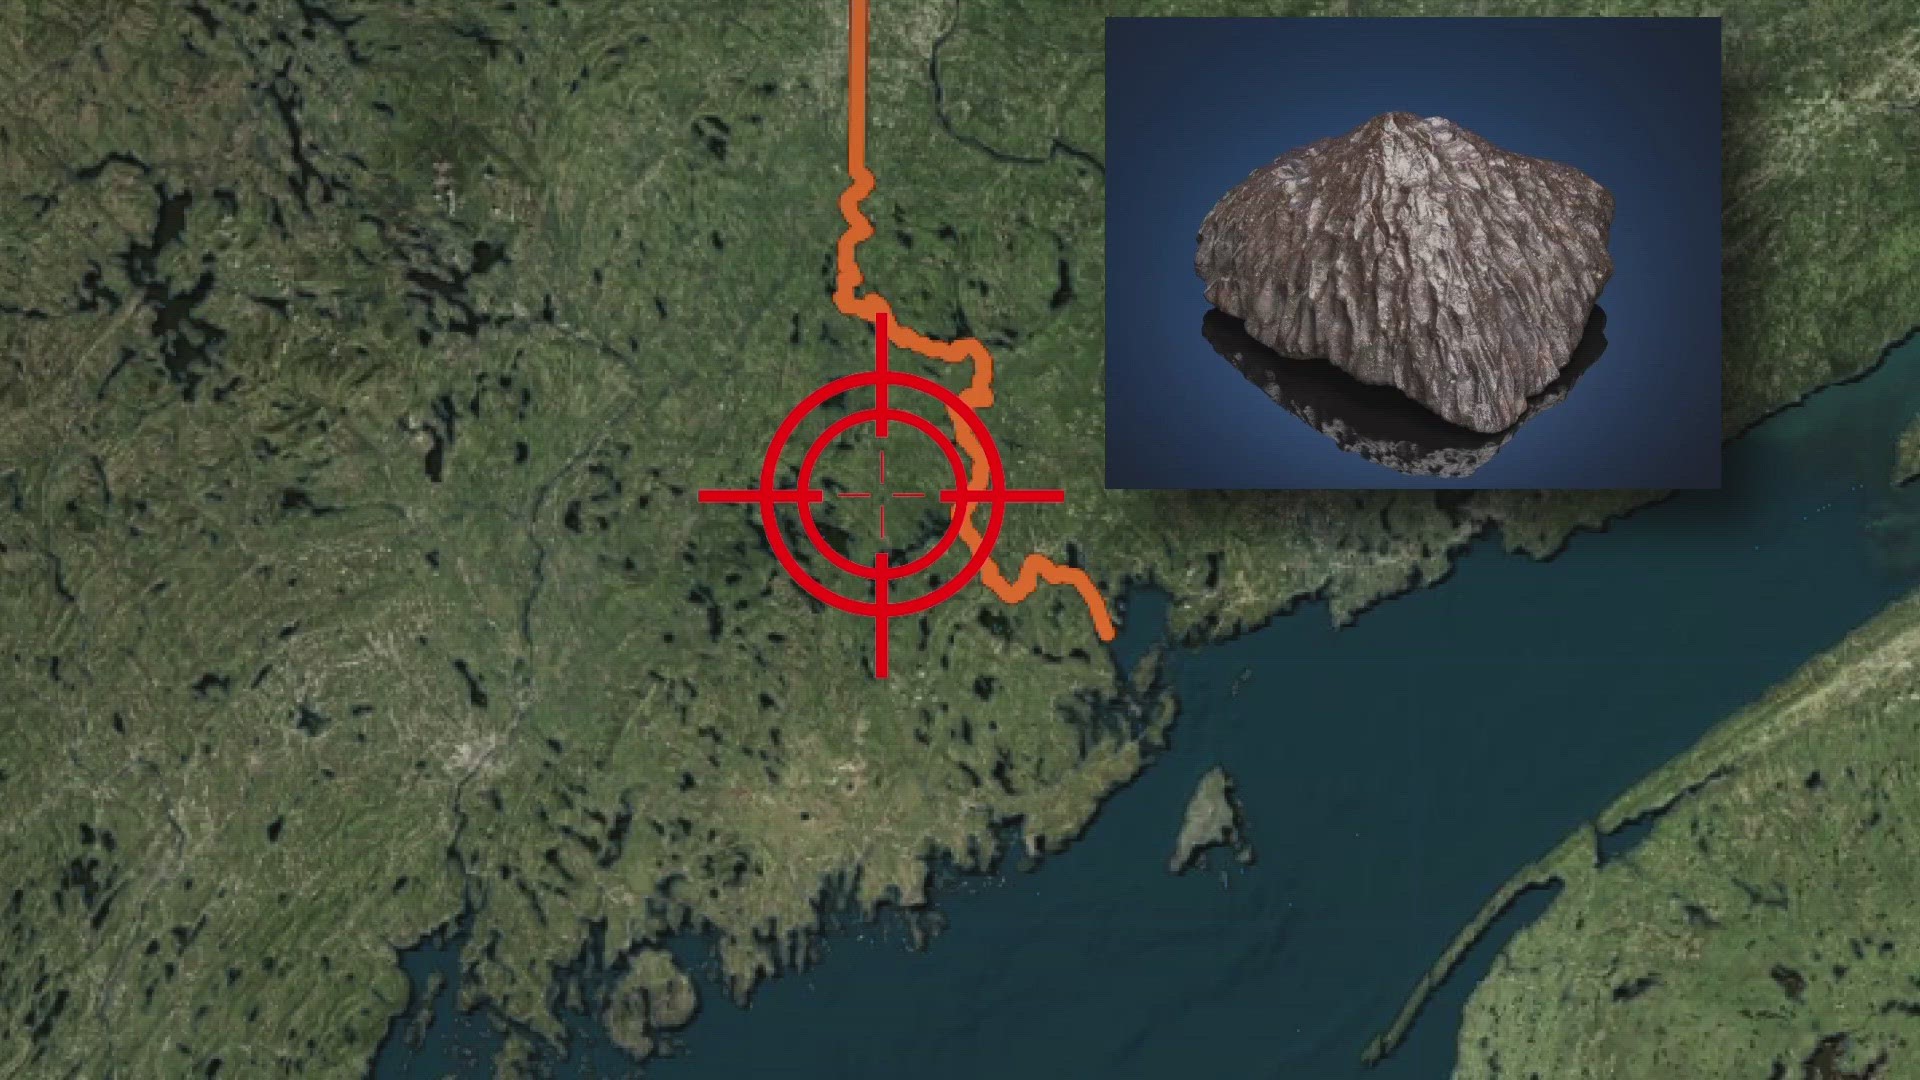 Museum offers 25K reward after meteorites hit Maine